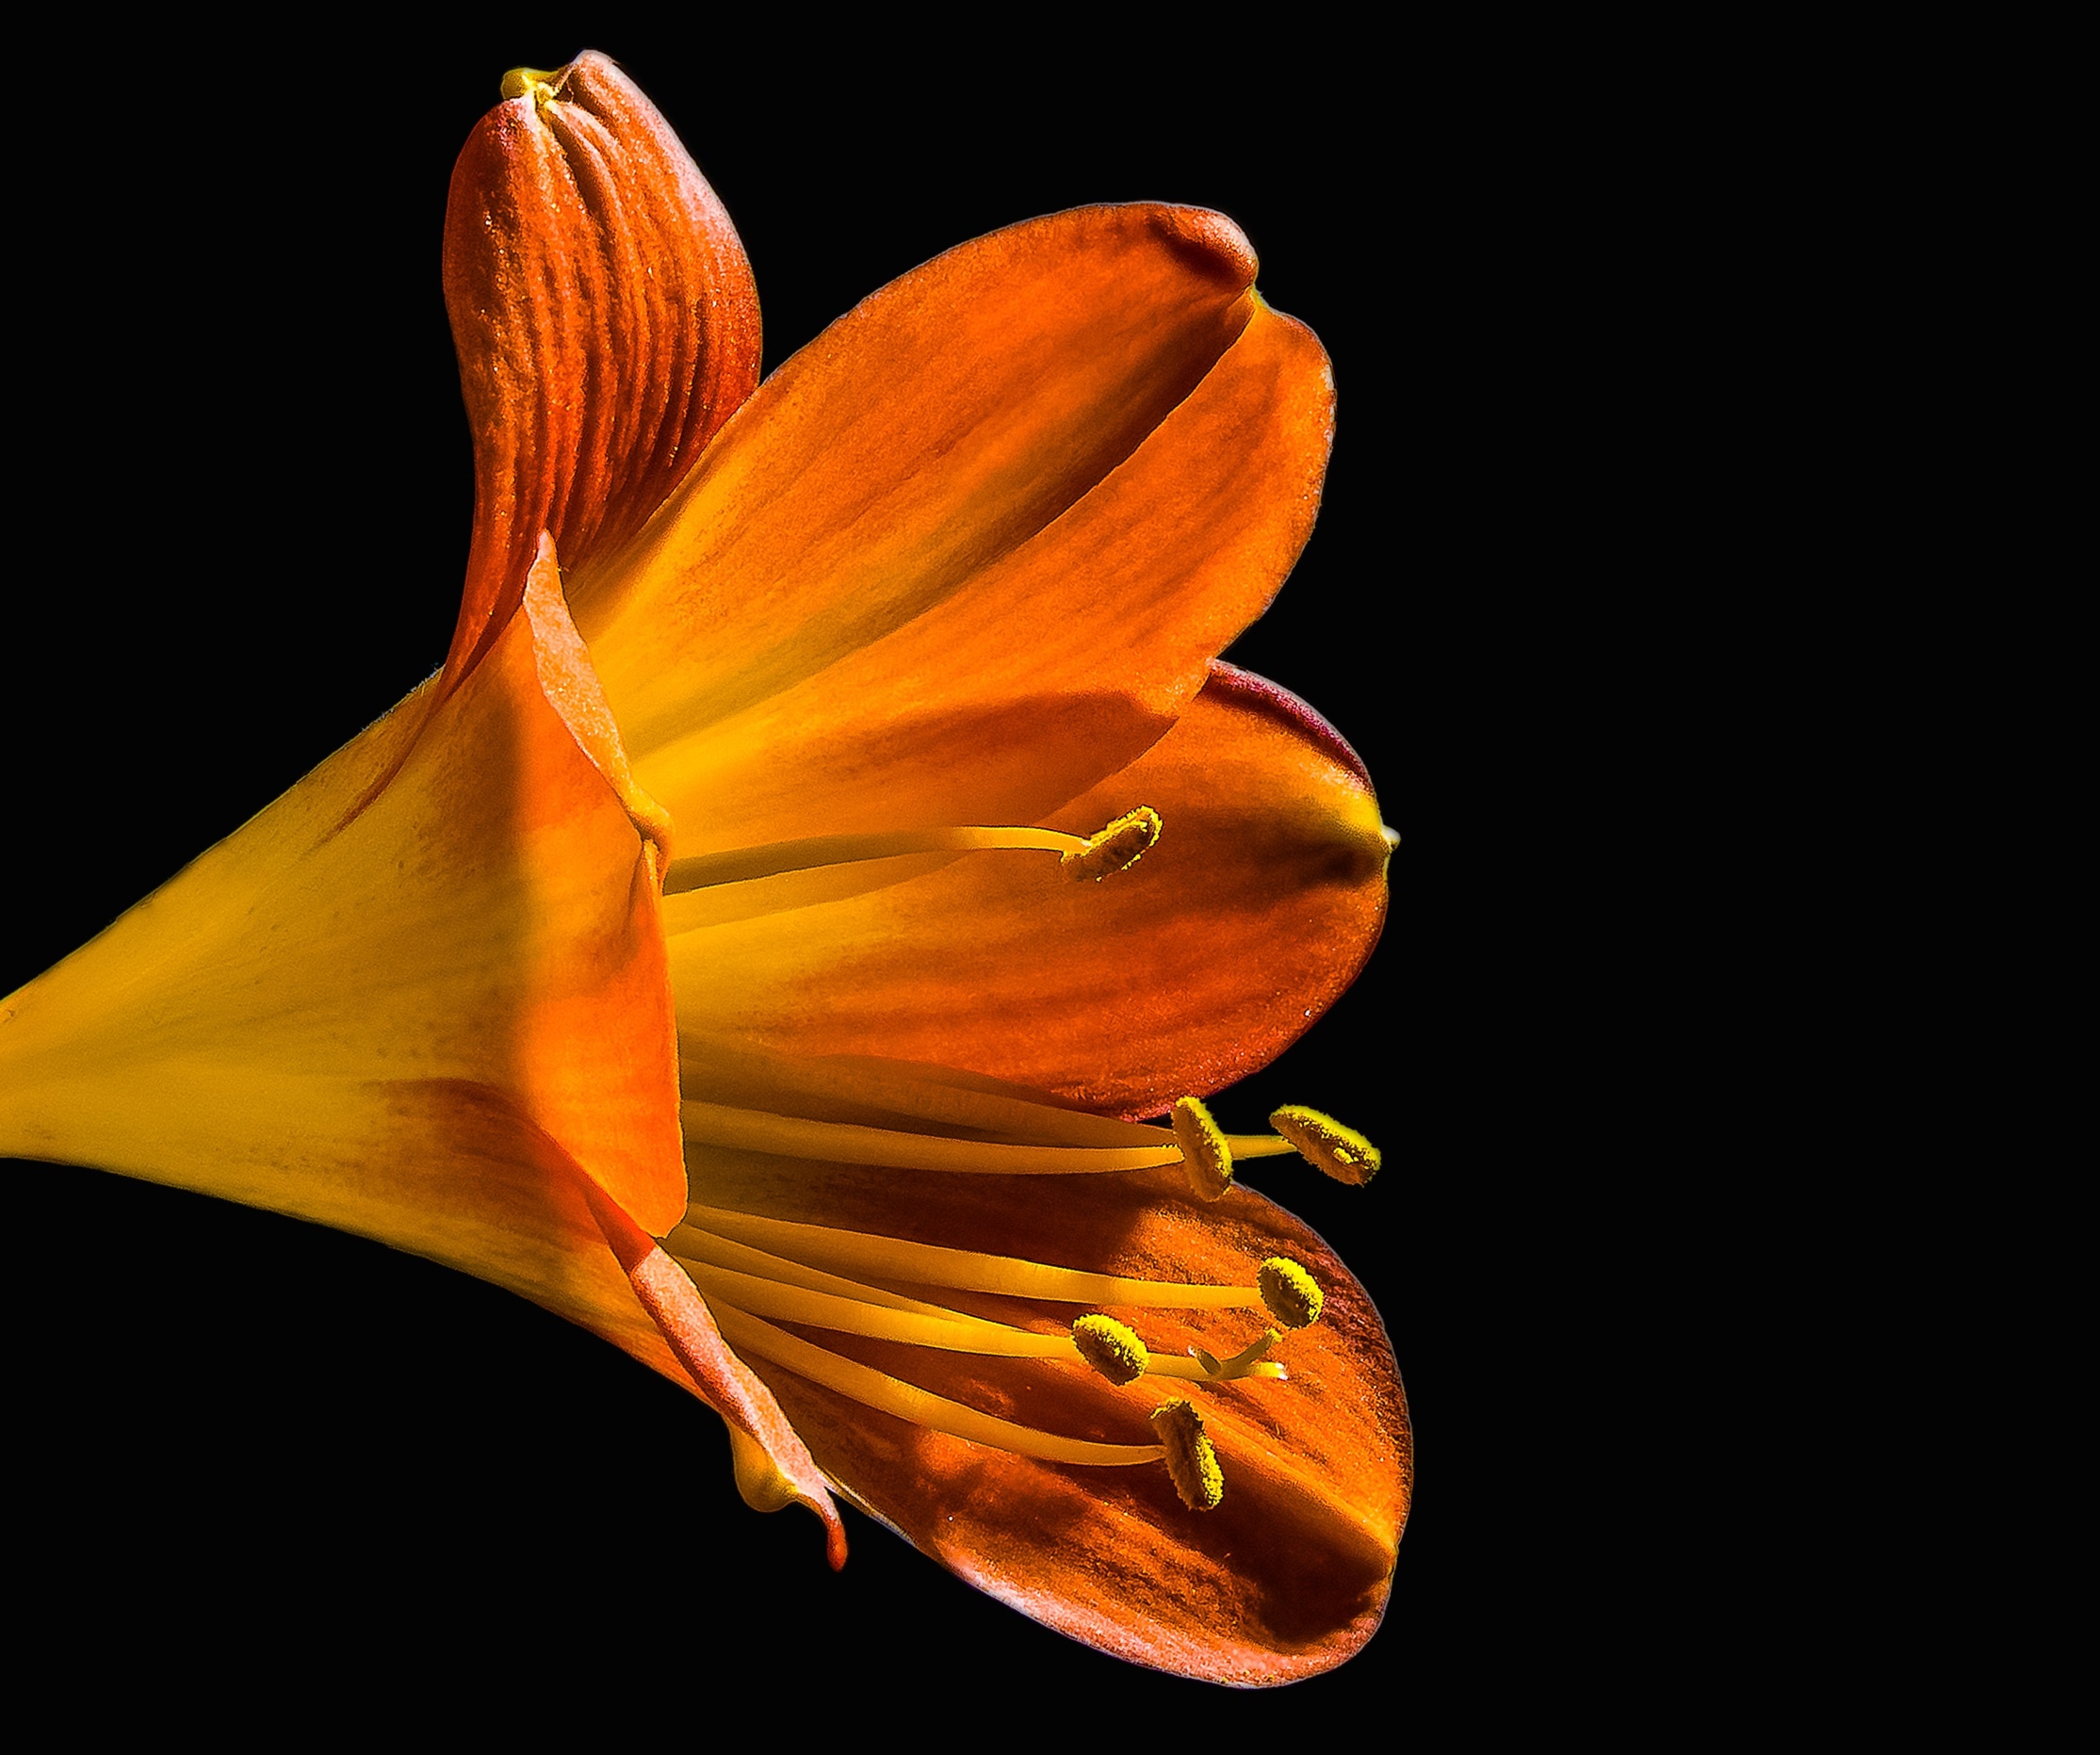 orange lily close-up photo